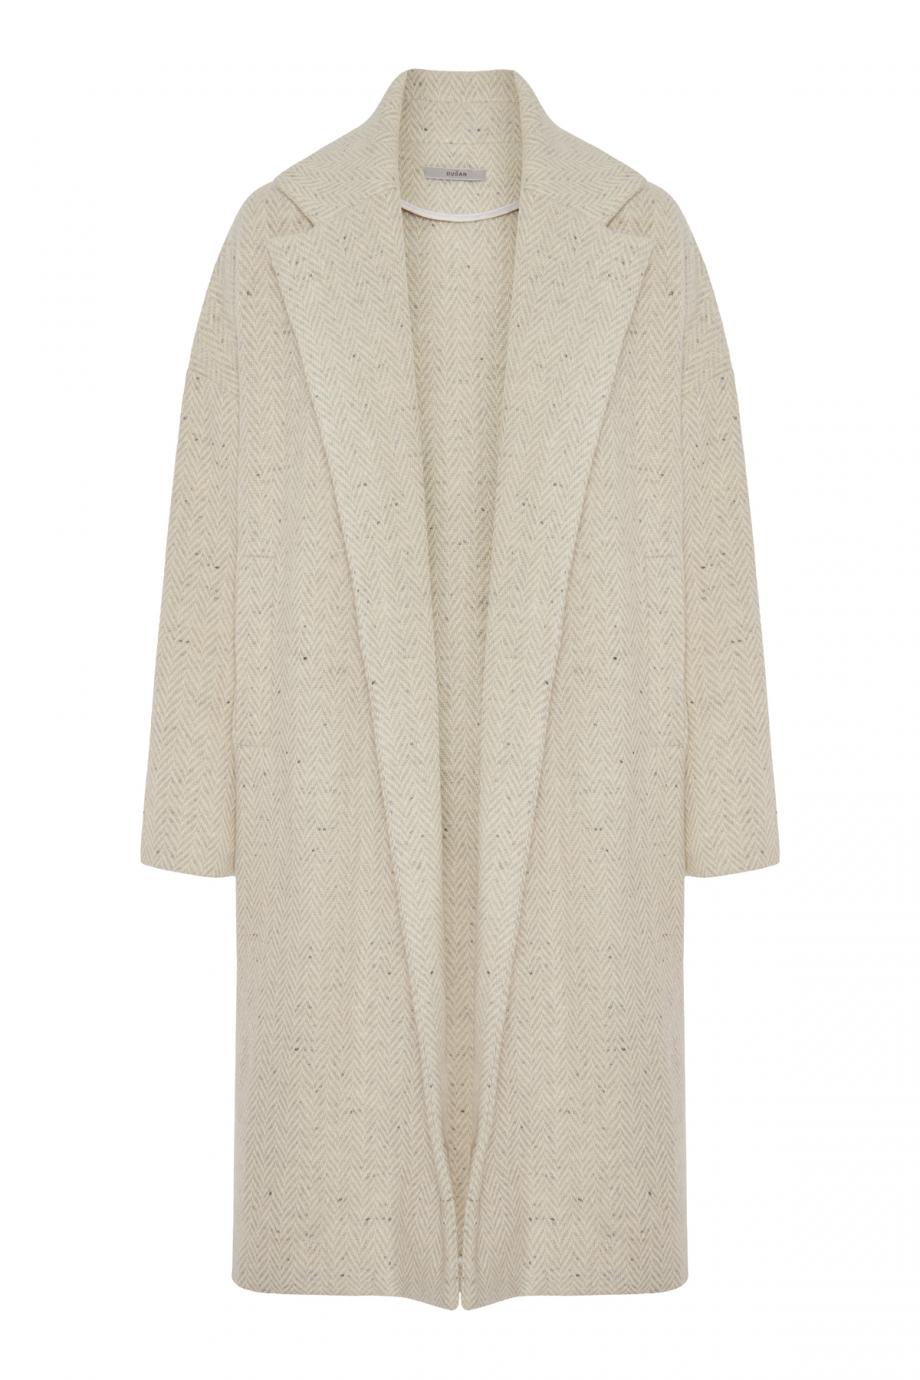 Oversized herringbone wool and cashmere coat